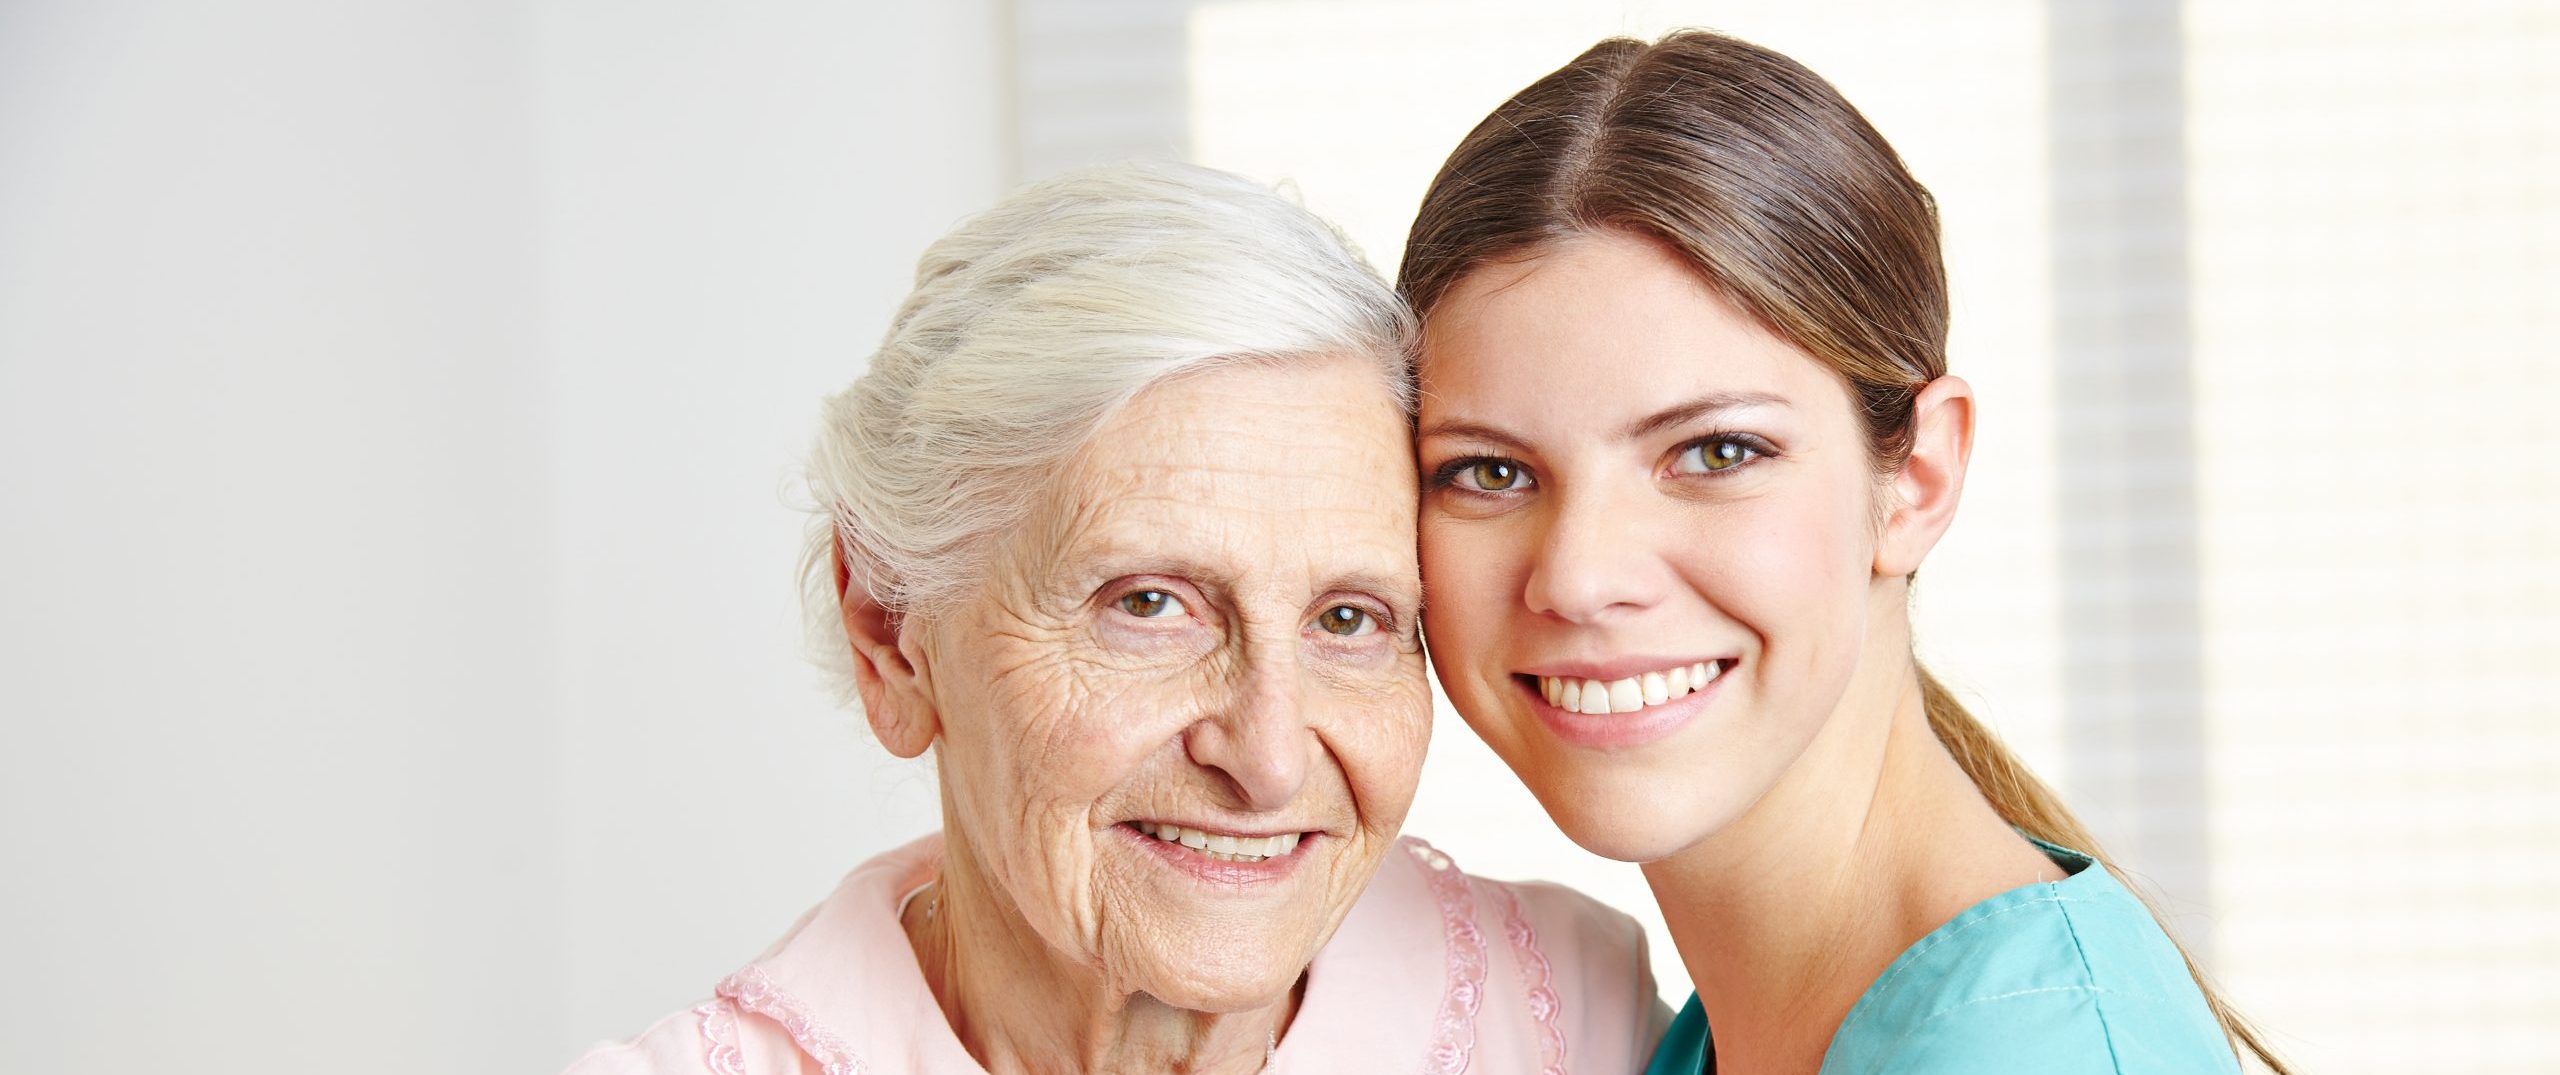 Caregiver embracing happy senior woman